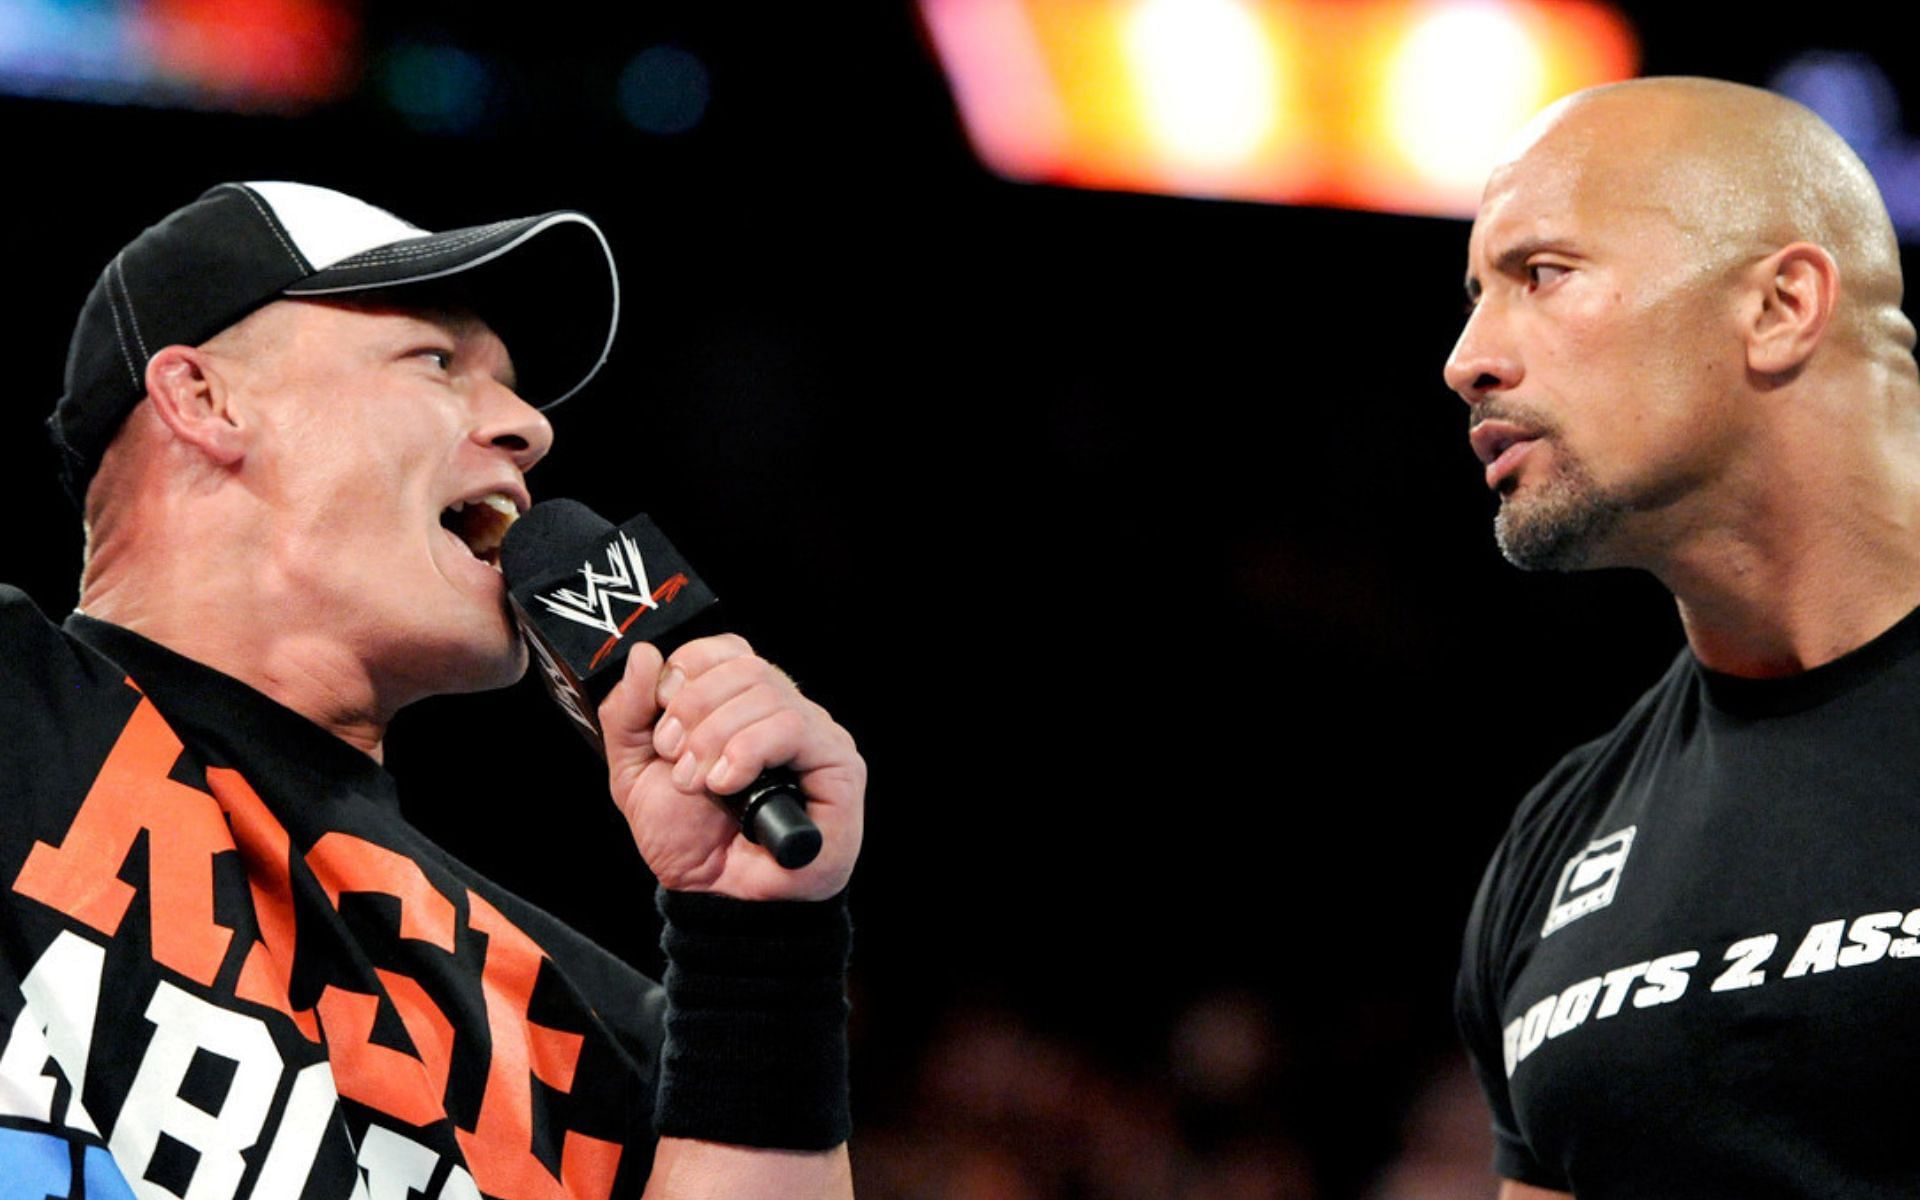 WWE Superstars John Cena and The Rock